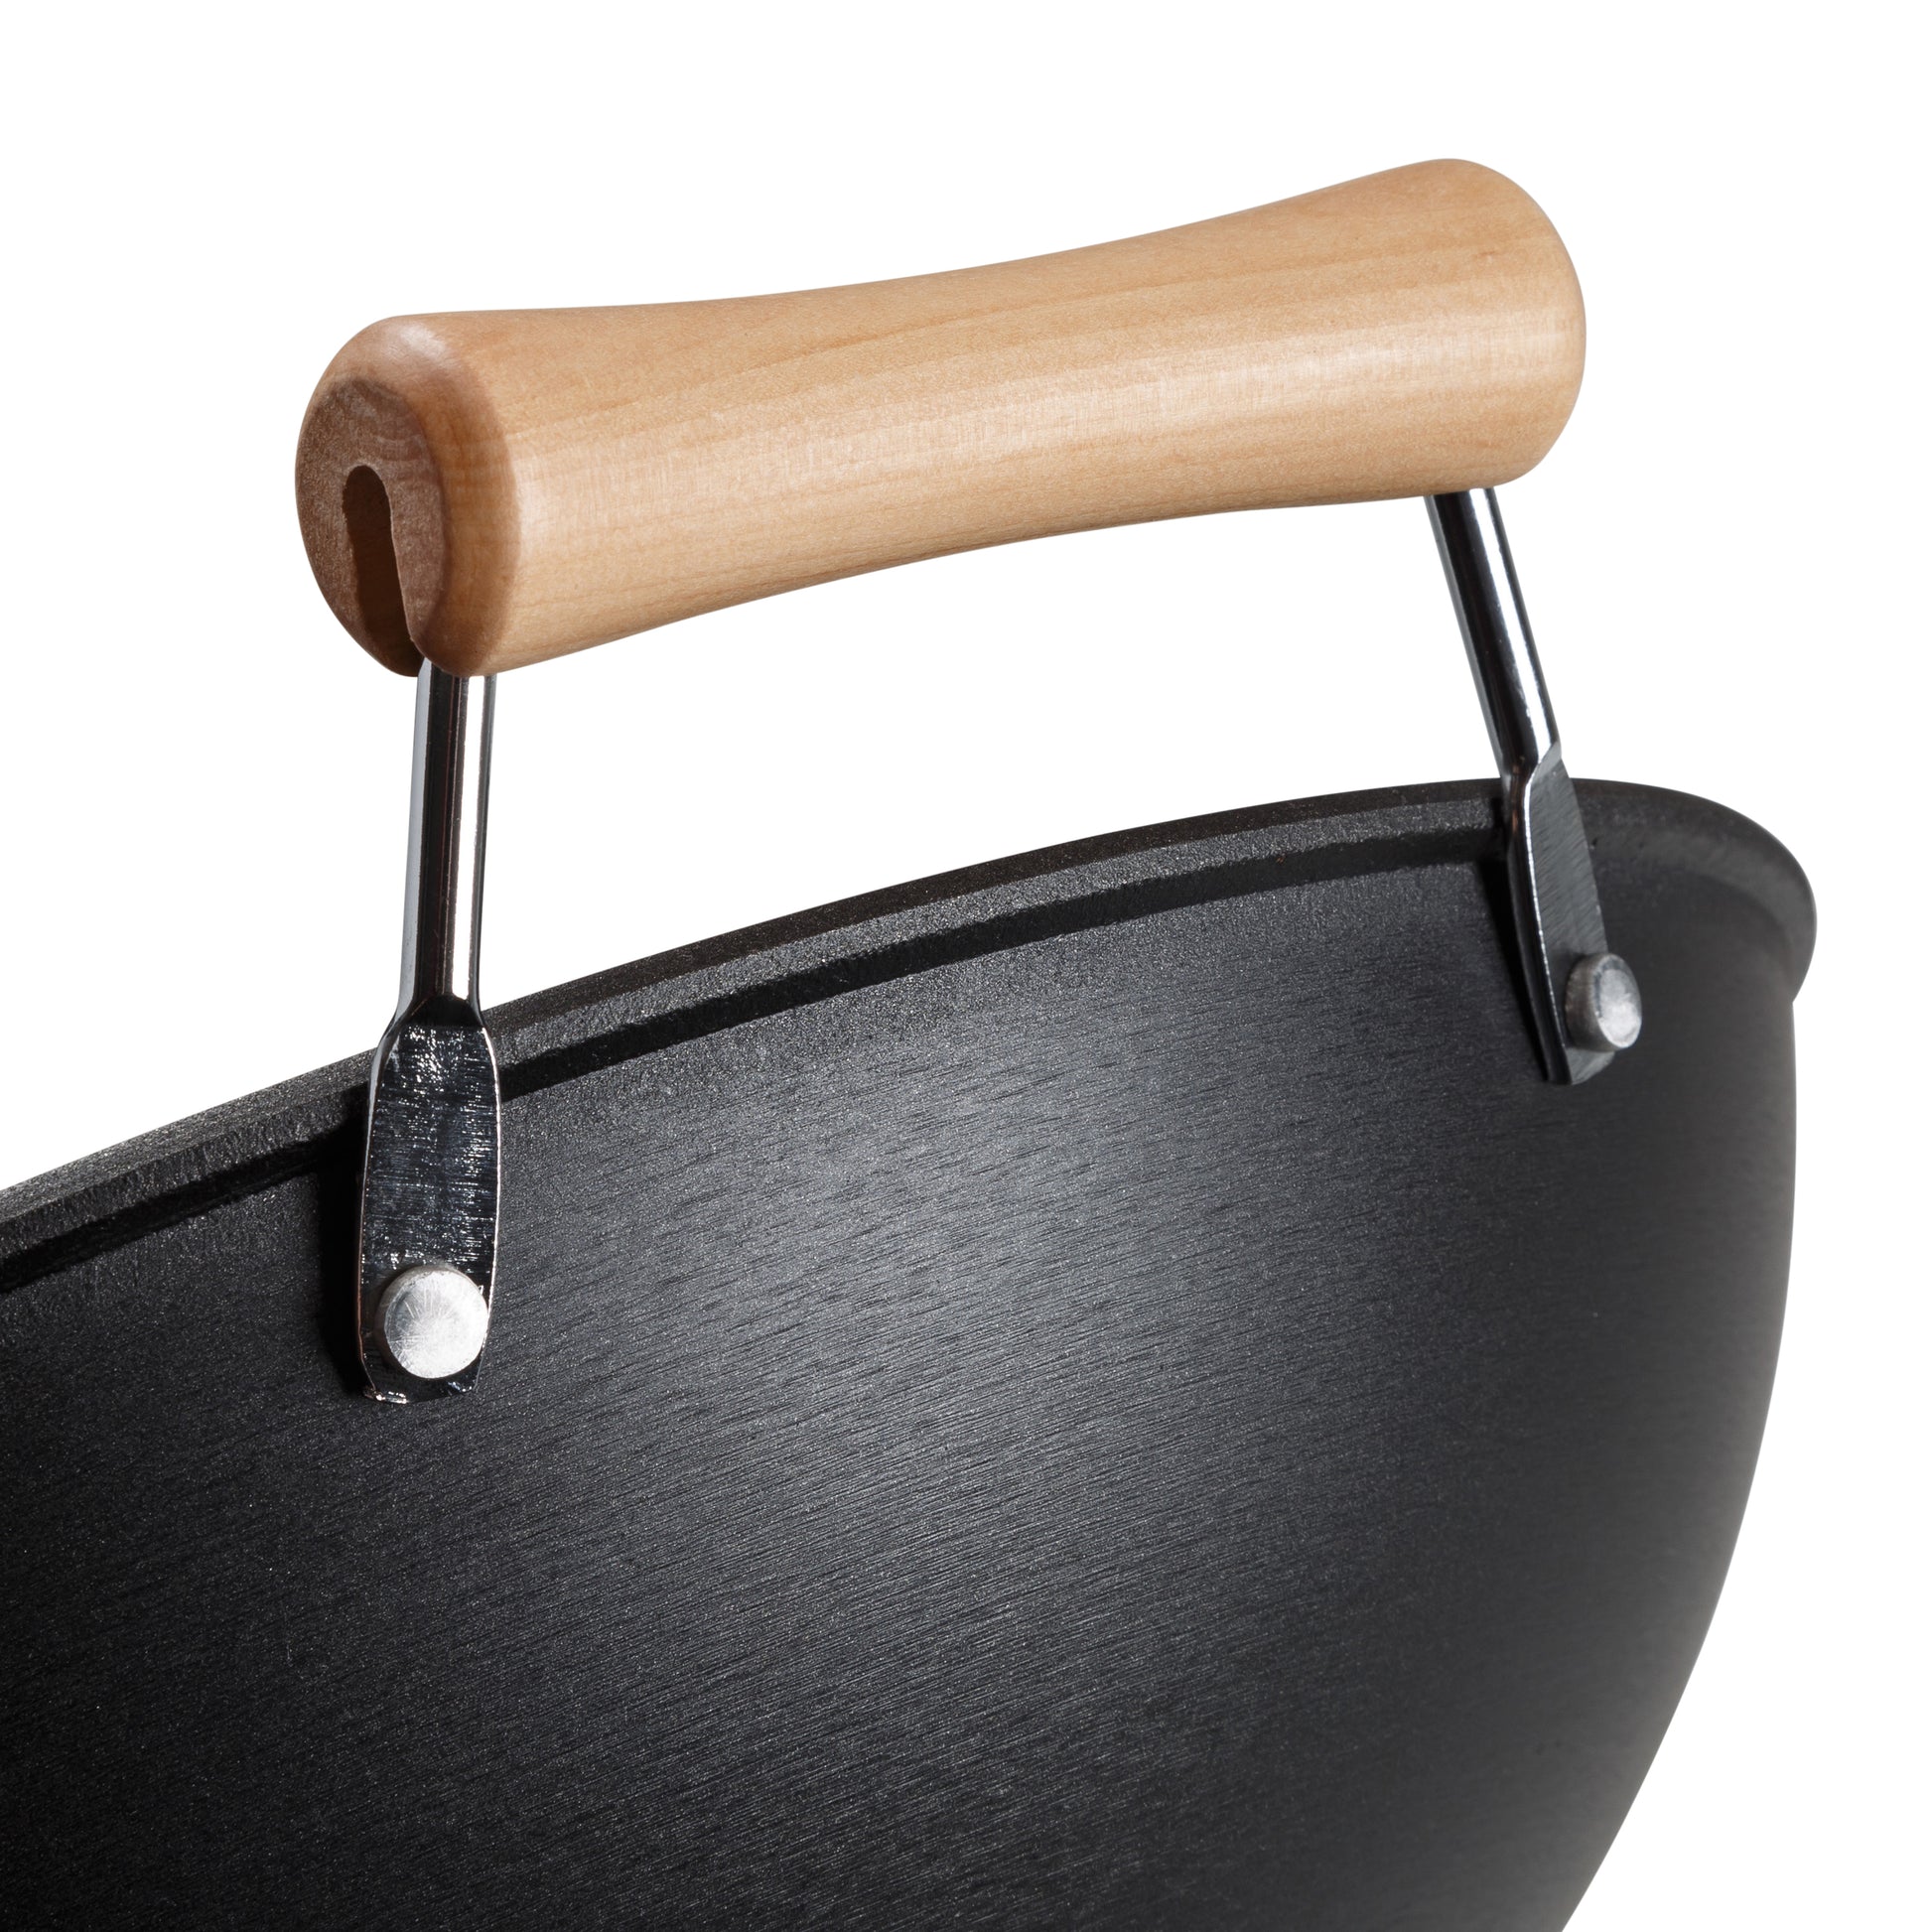 Professional Series 14-Inch Preseasoned Cast Iron Flat Bottom Wok with –  KitchenSupply